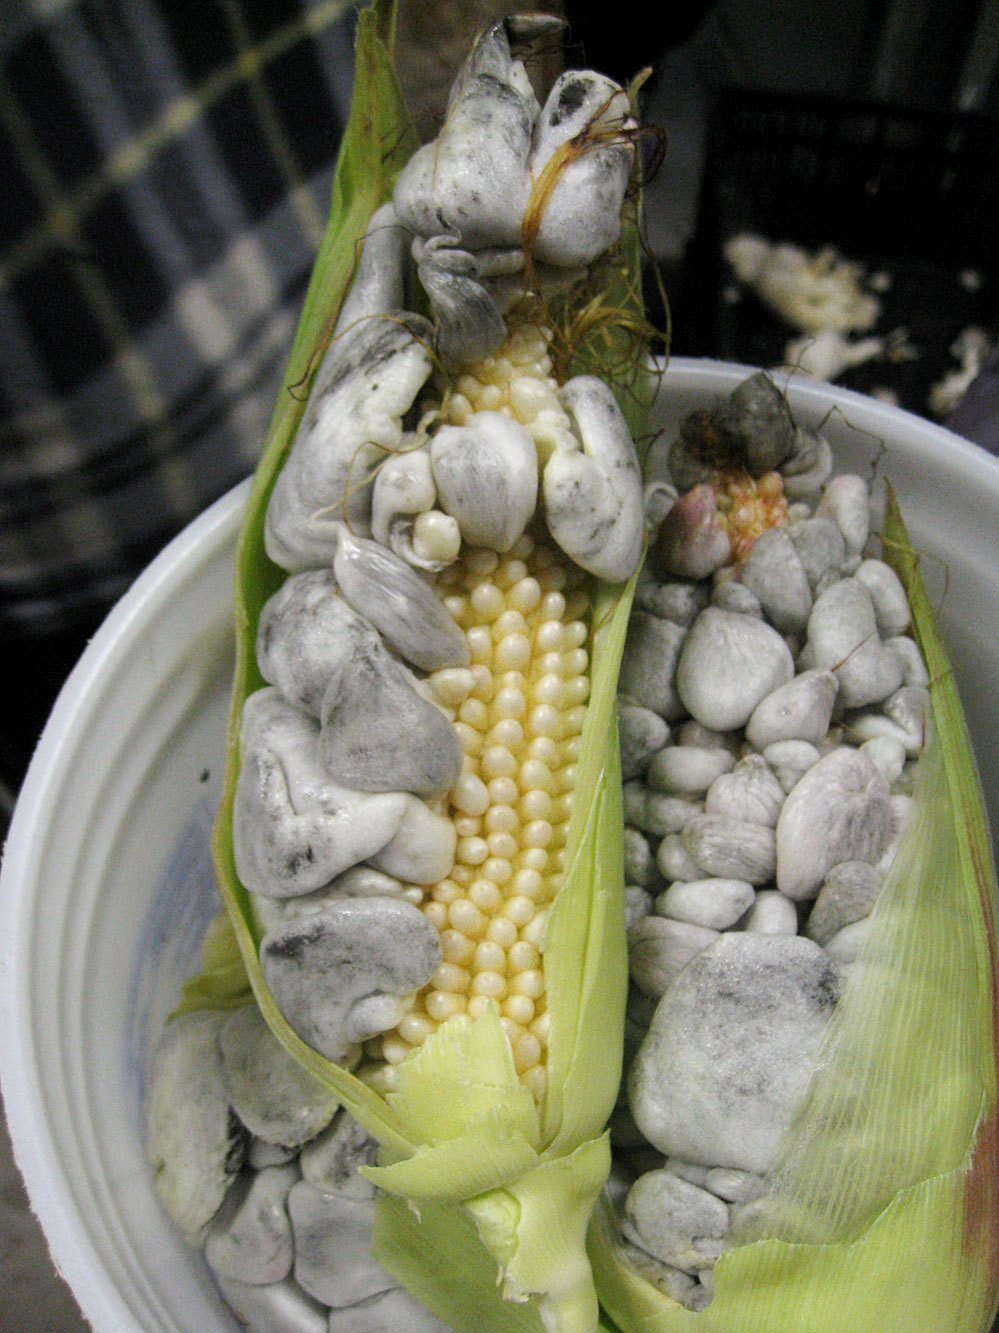 Huitlacoche growing on corn kernels in Mexico.